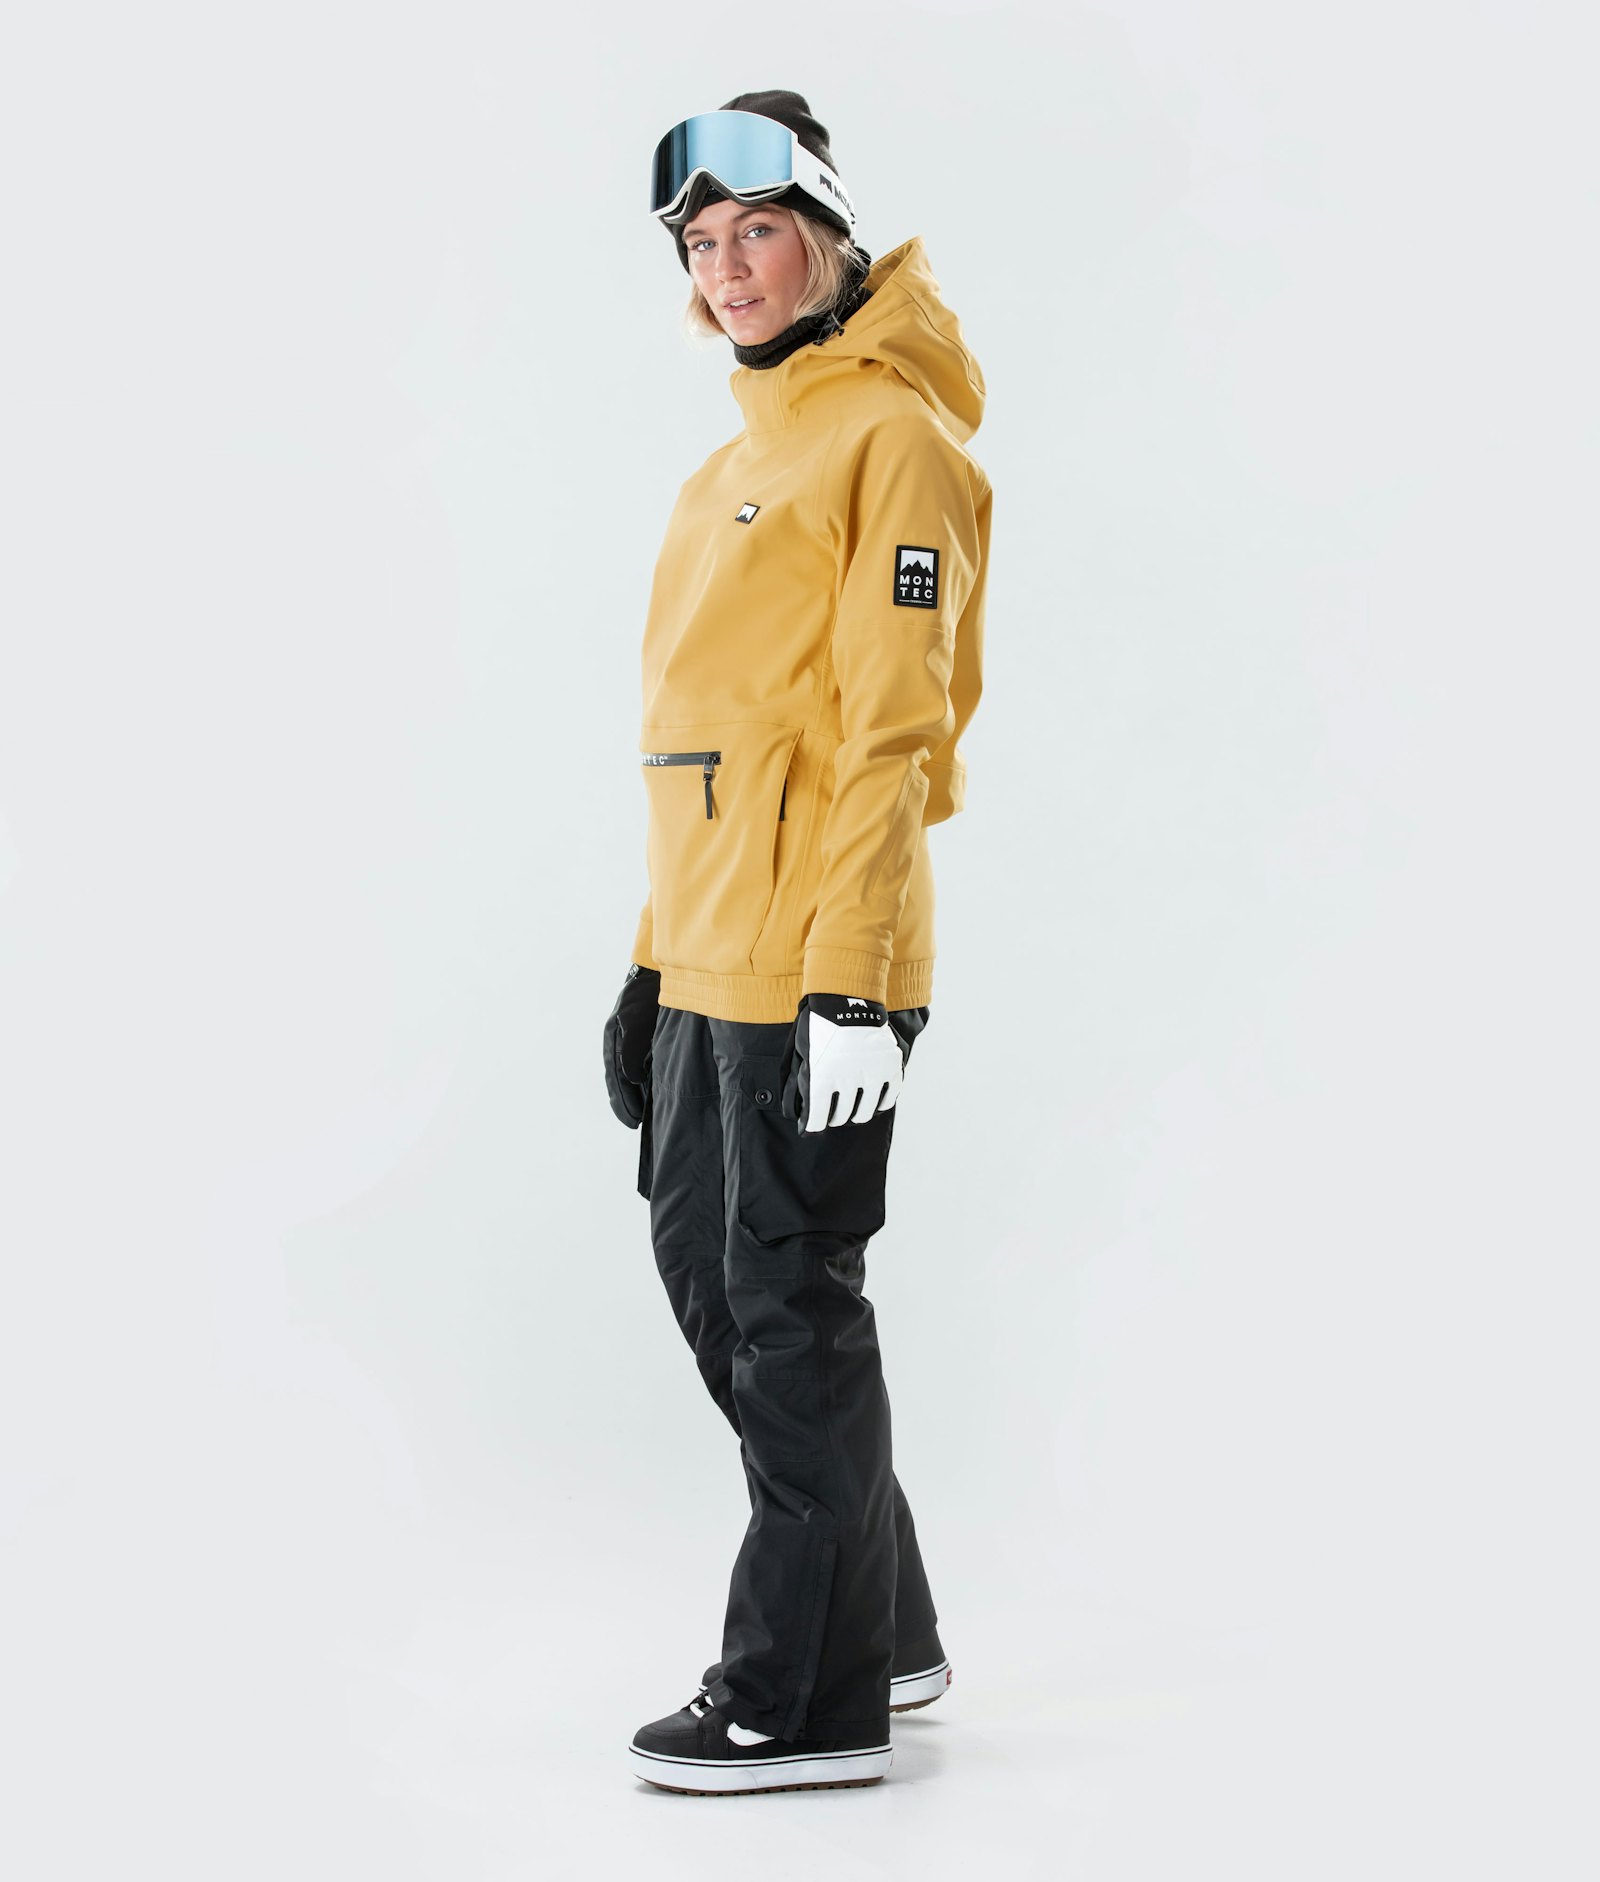 Tempest W 2020 Veste Snowboard Femme Yellow Renewed